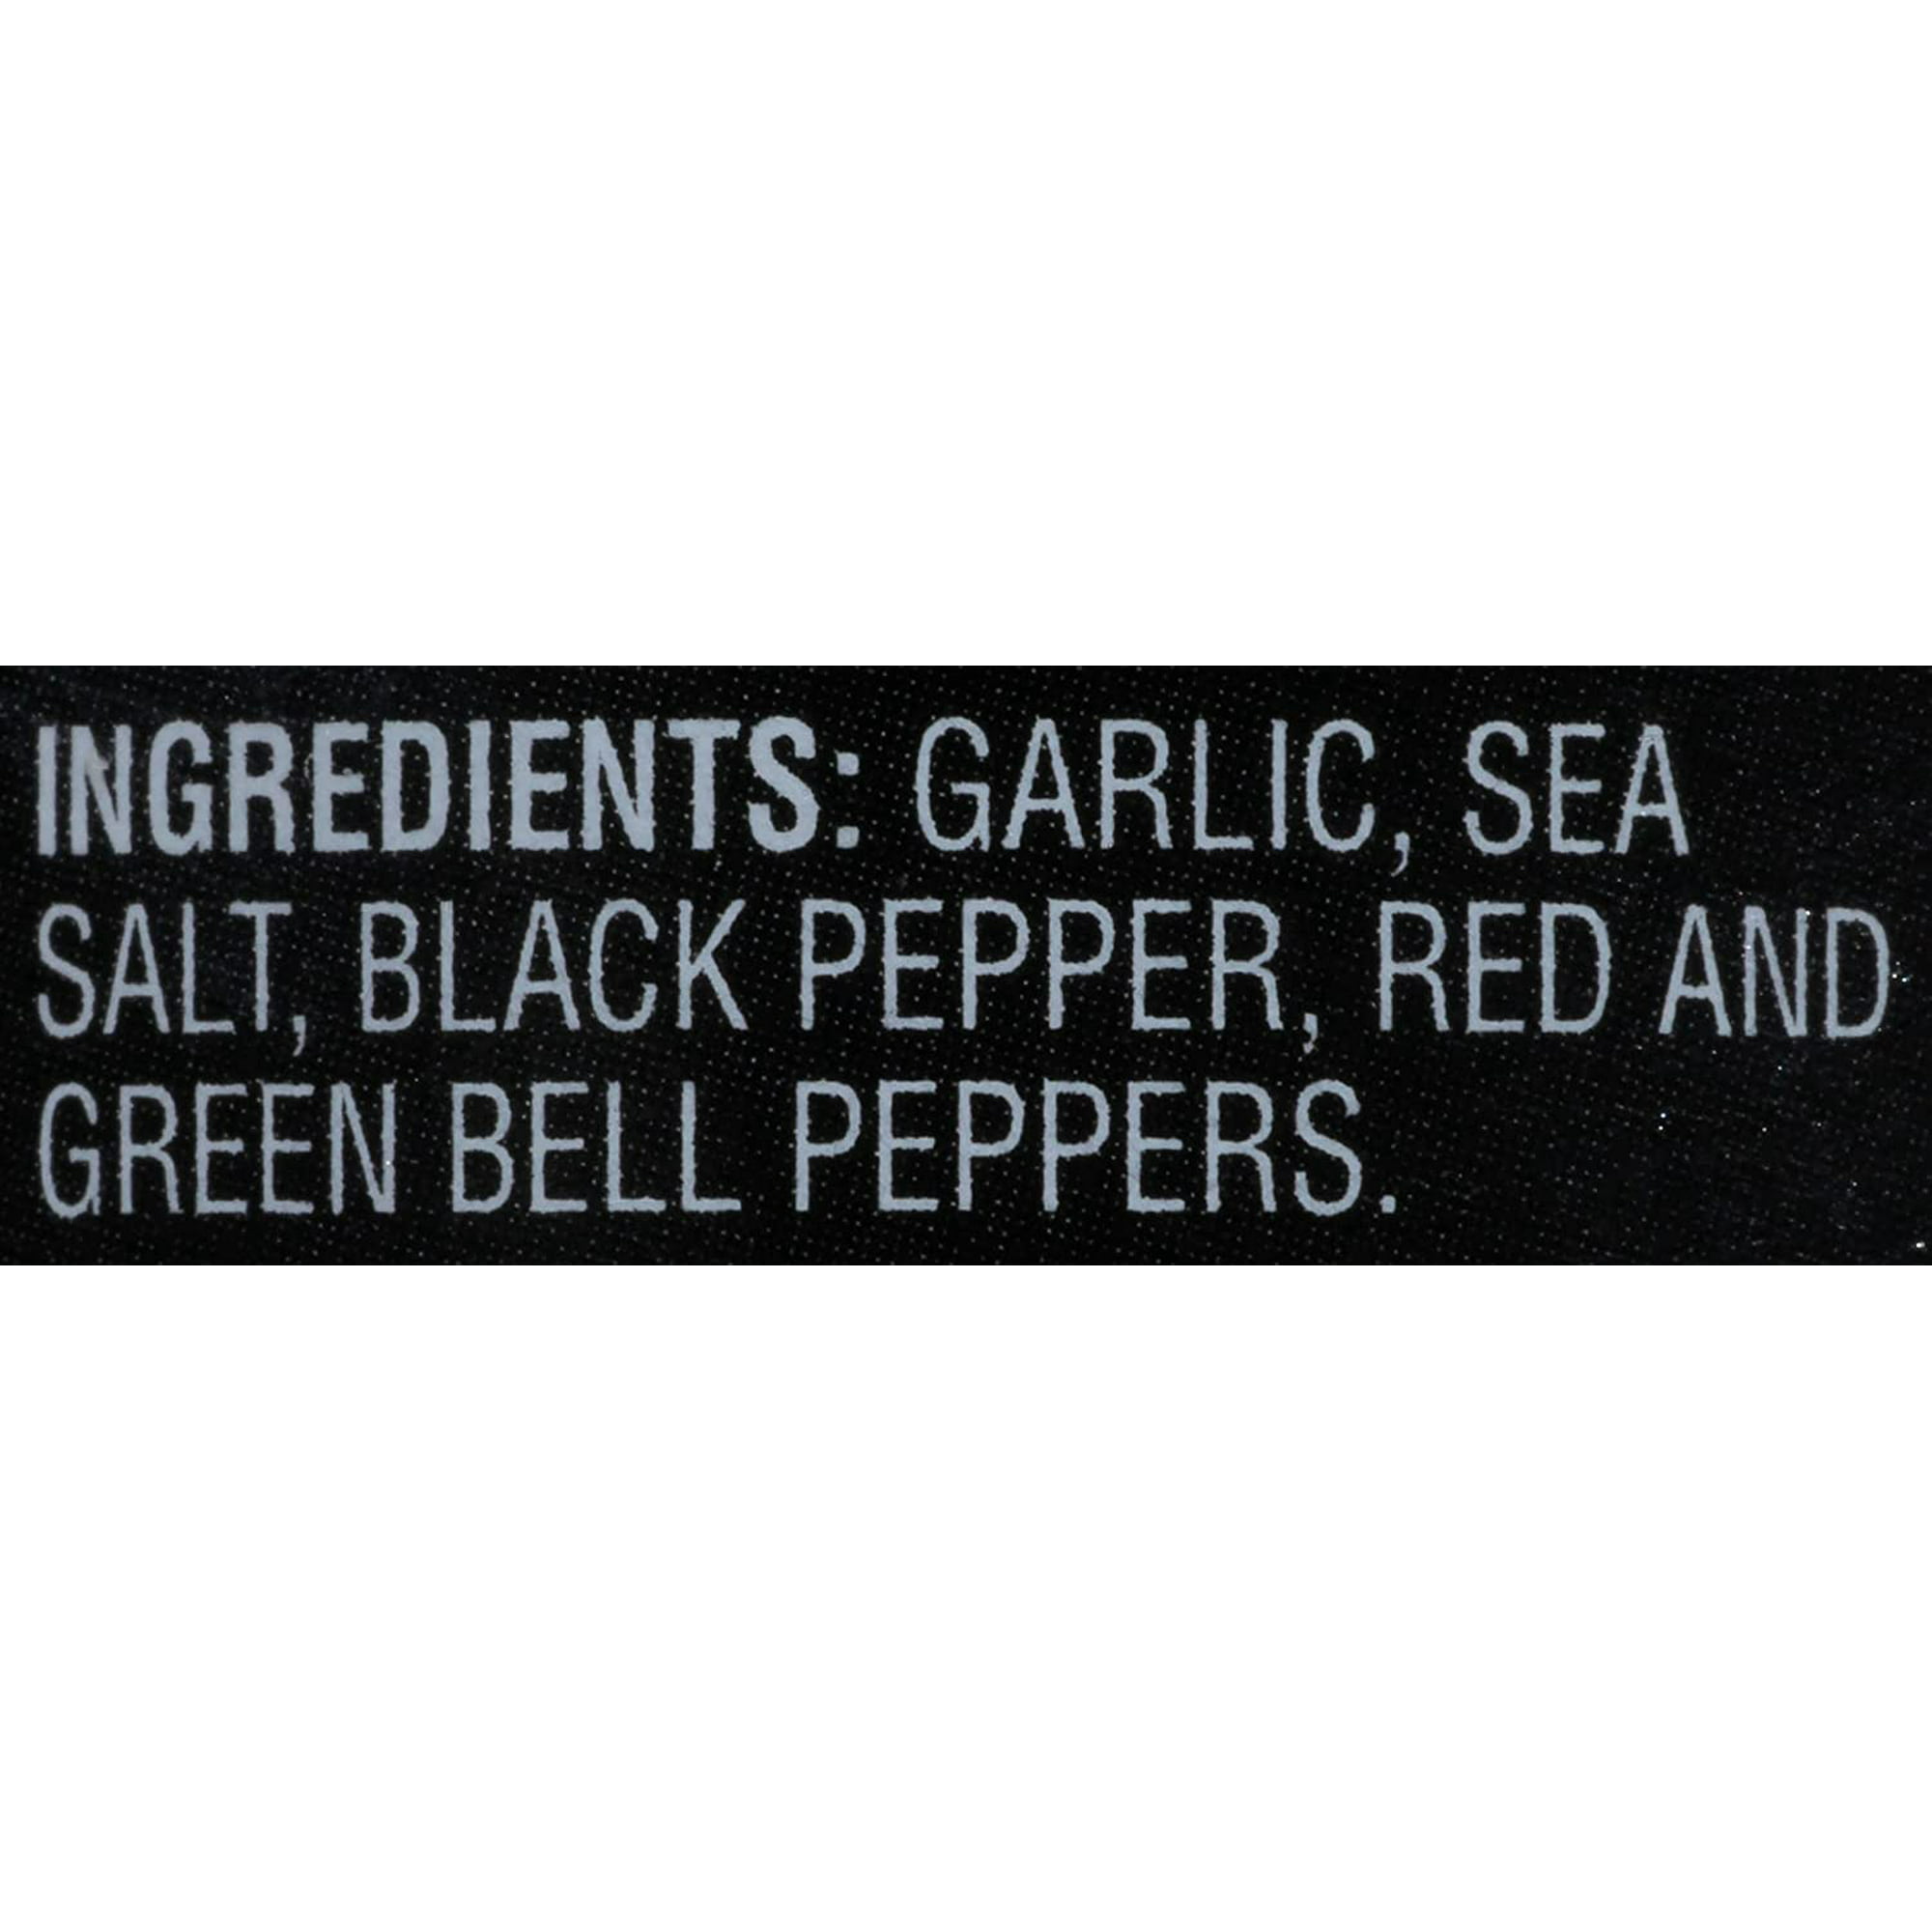 Mccormick Grinder Seasoning, Garlic Pepper, Adjustable - 1.23 oz